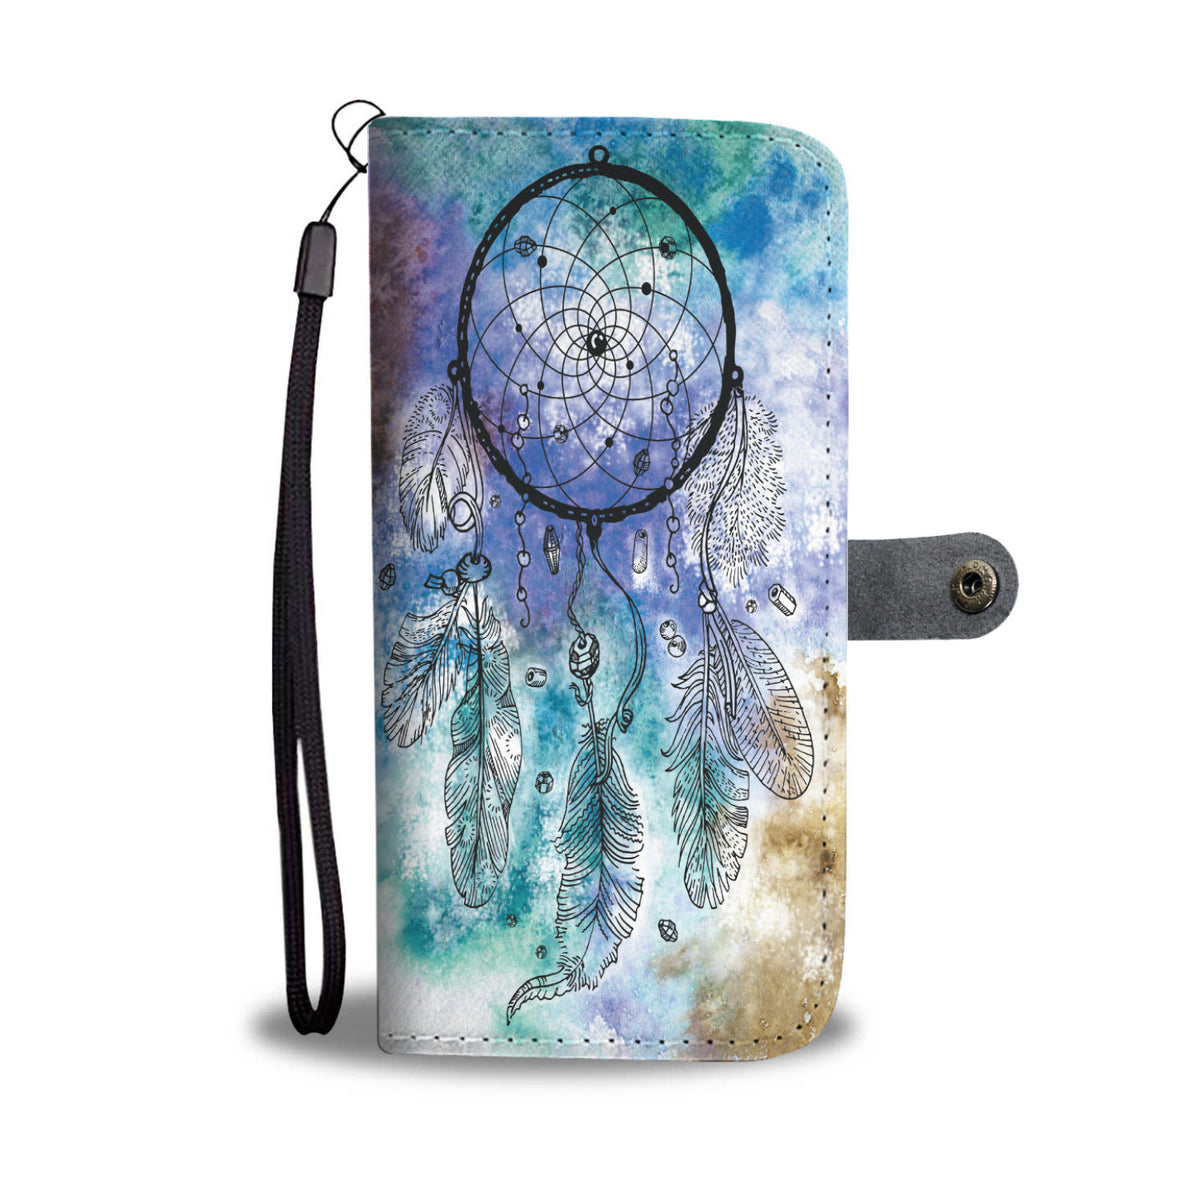 Powwow Store gb nat00377 full color dream catcher wallet phone case